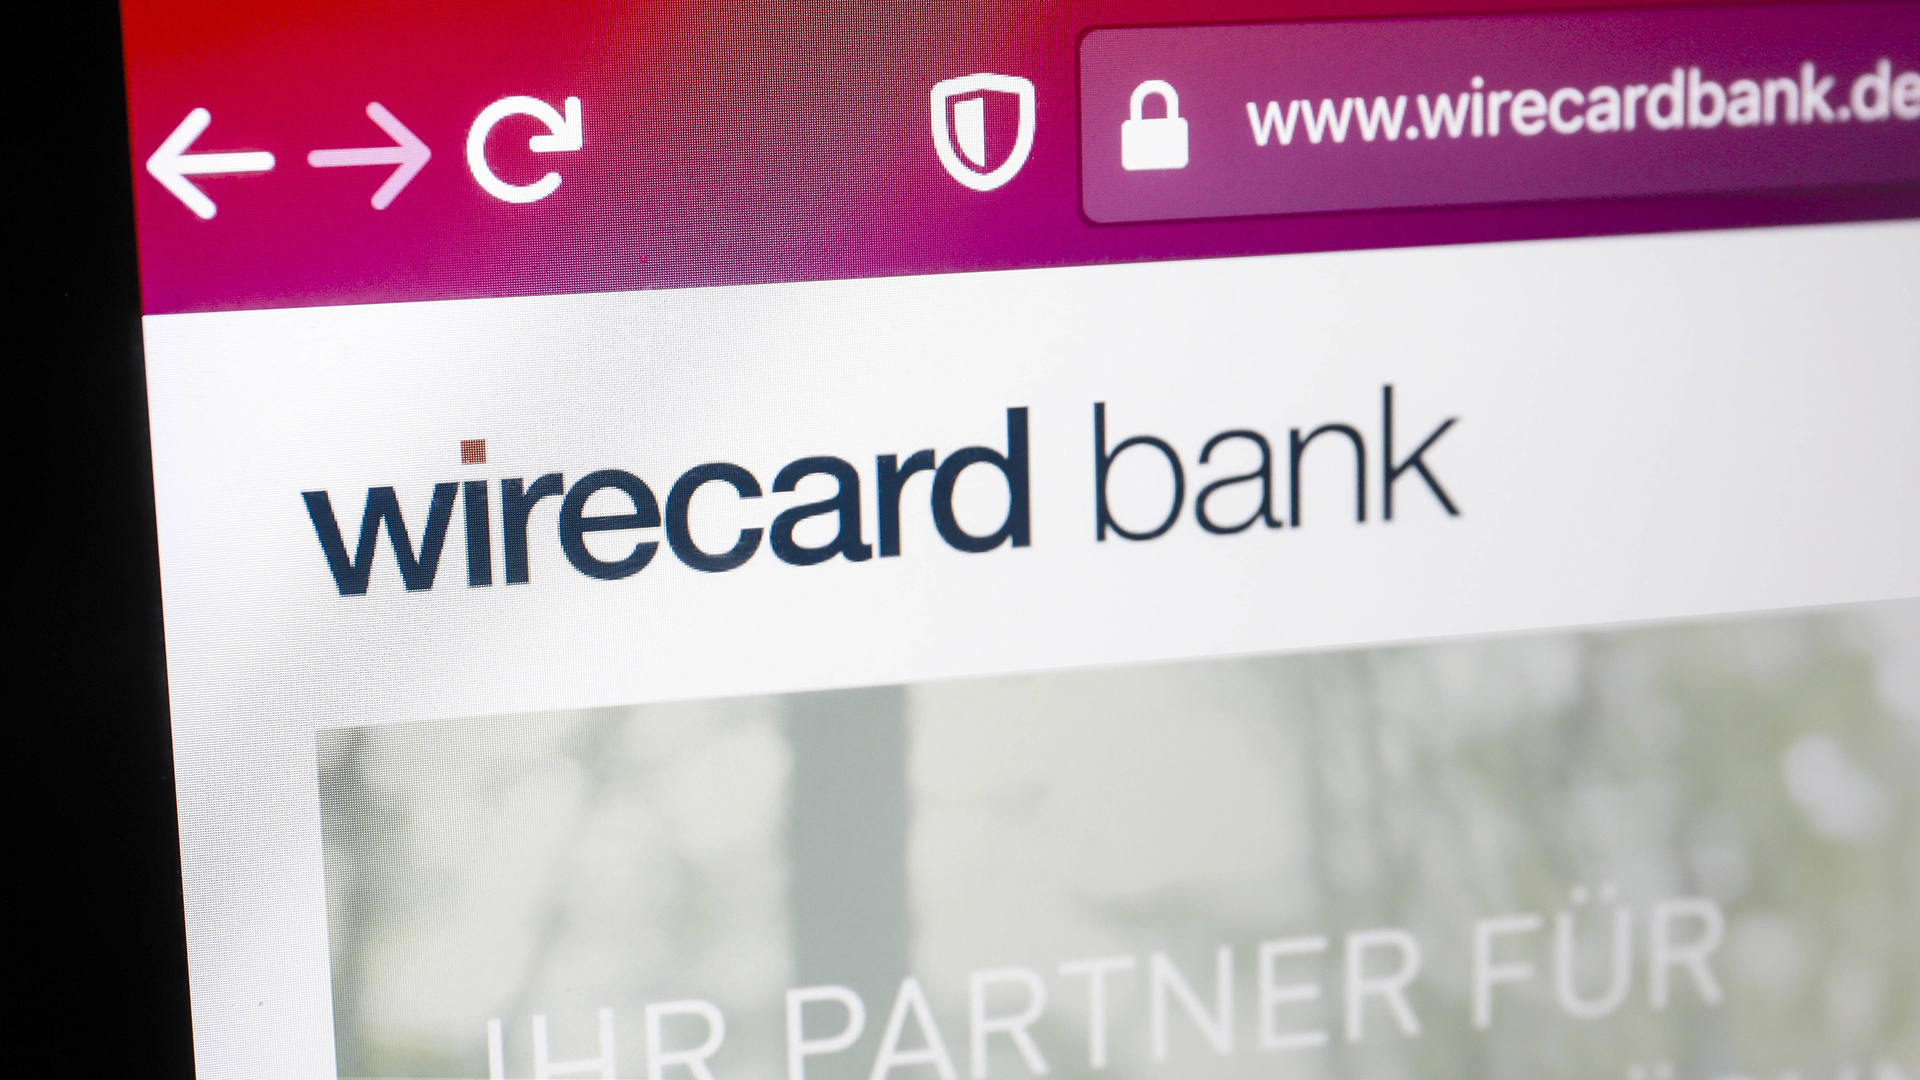 Homepage wirecard bank | imago images/Rupert Oberhäuser